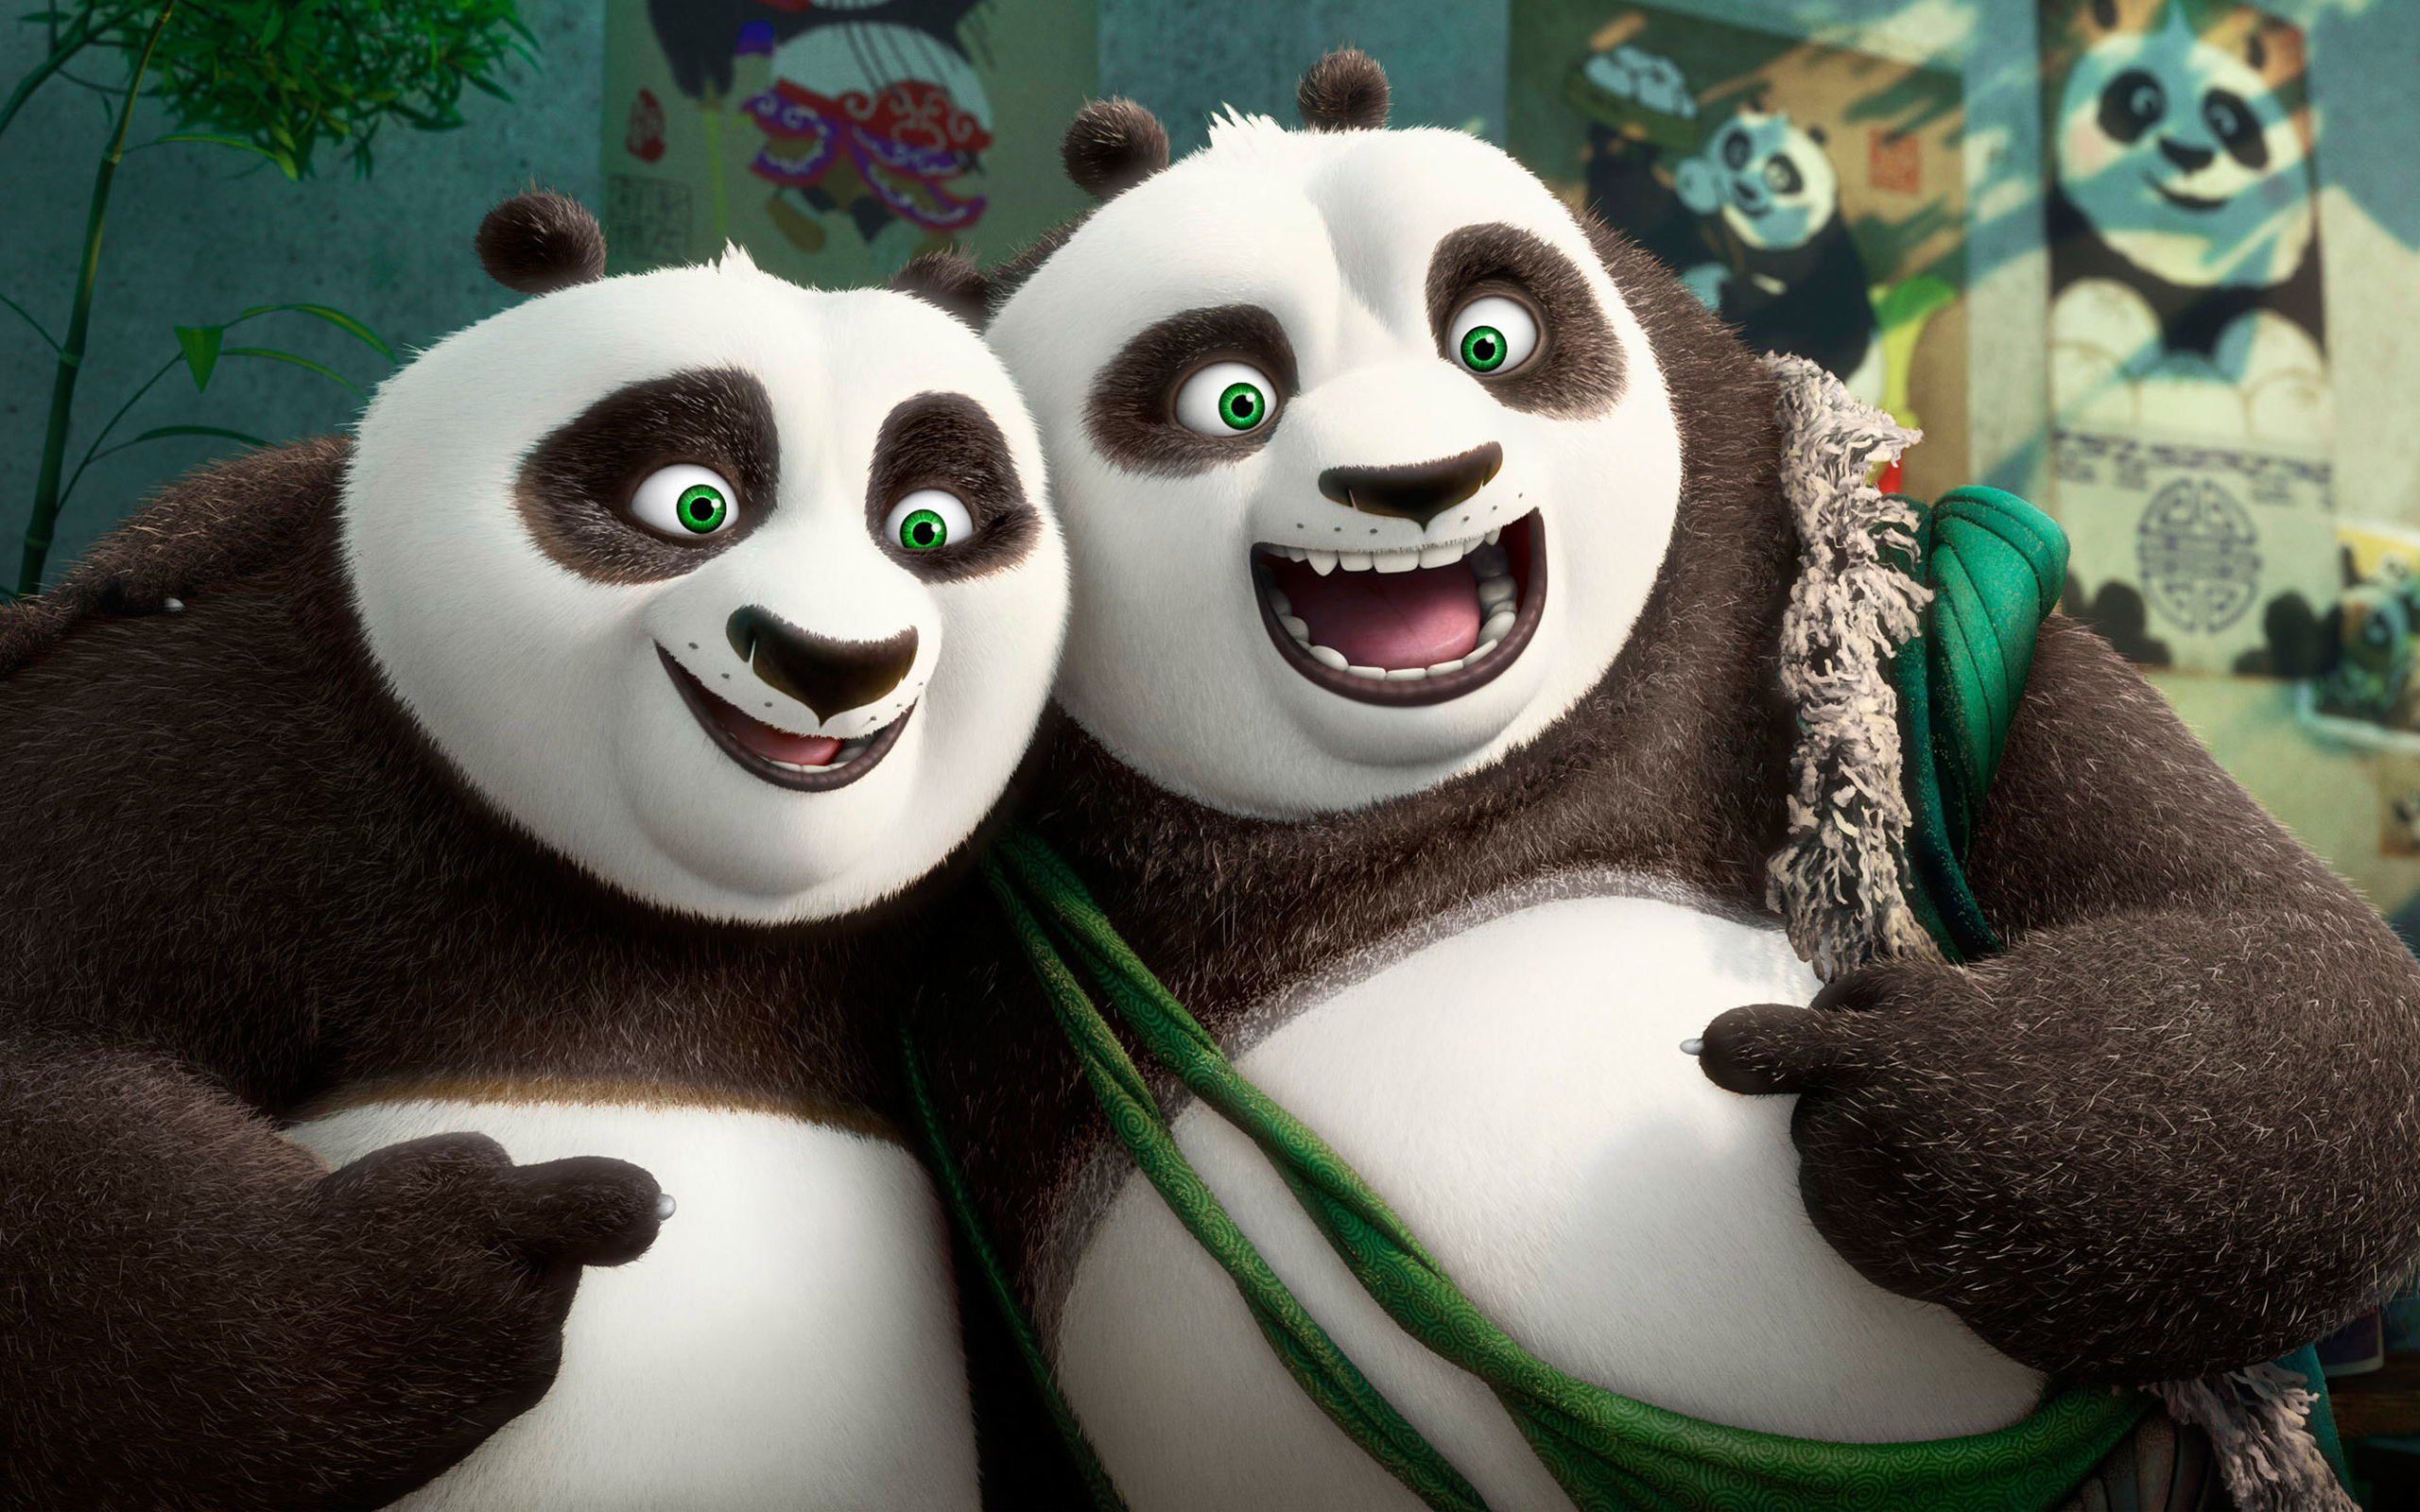 Movie Kung Fu Panda 3 HD Wallpaper | Background Image